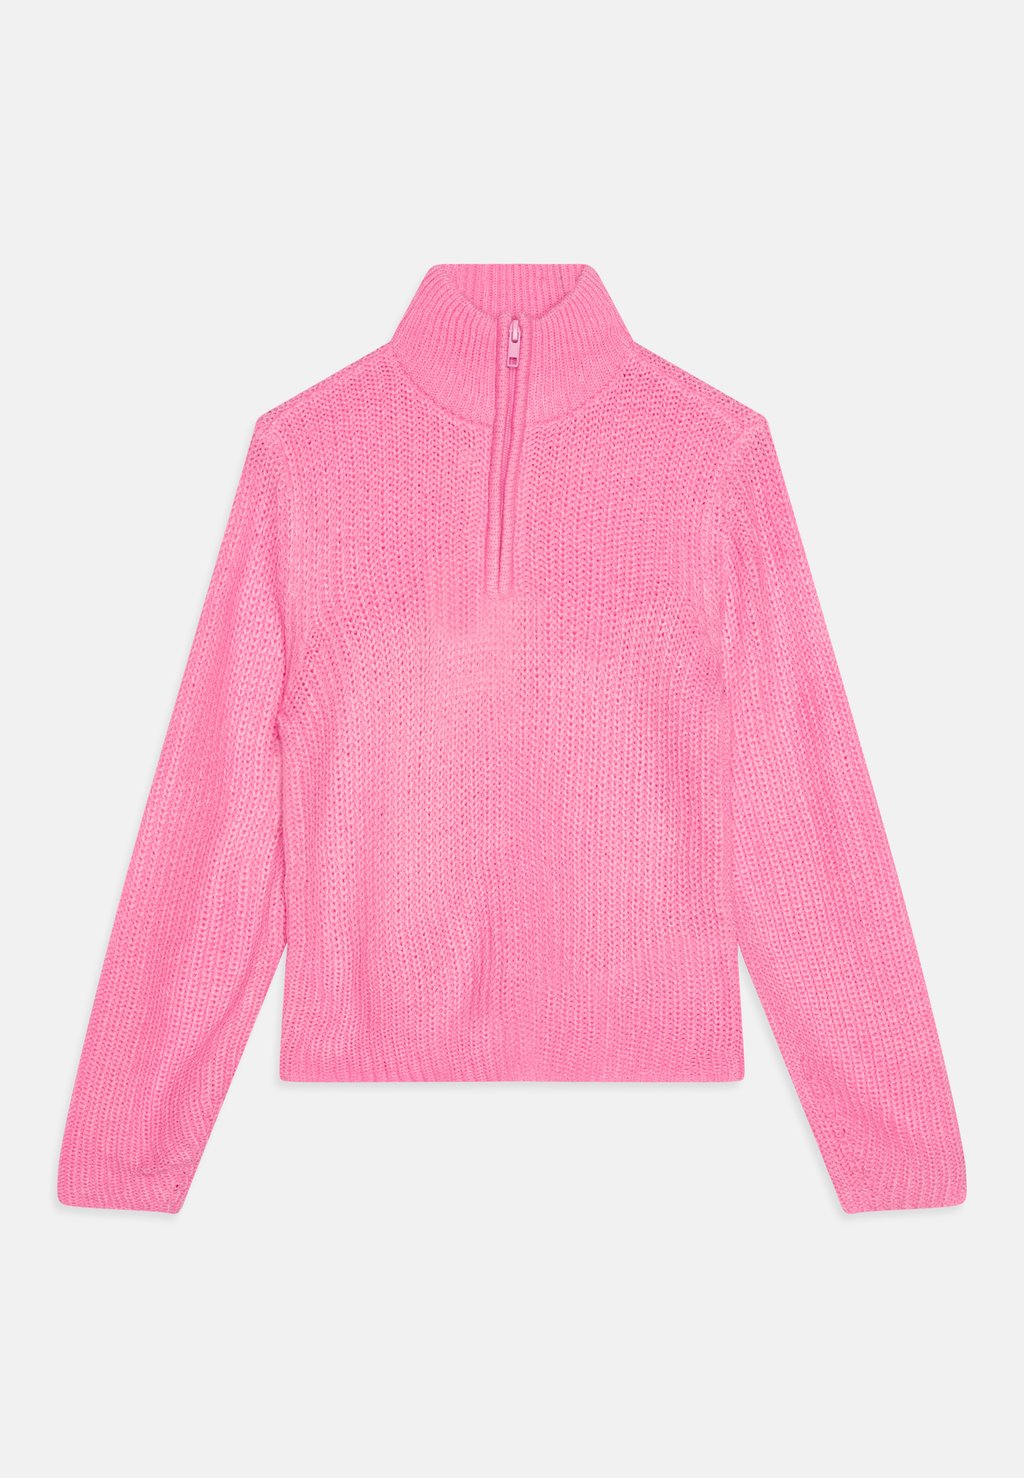 Вязаный свитер KOGSILLE HALF ZIP HIGHNECK Kids ONLY, цвет begonia pink